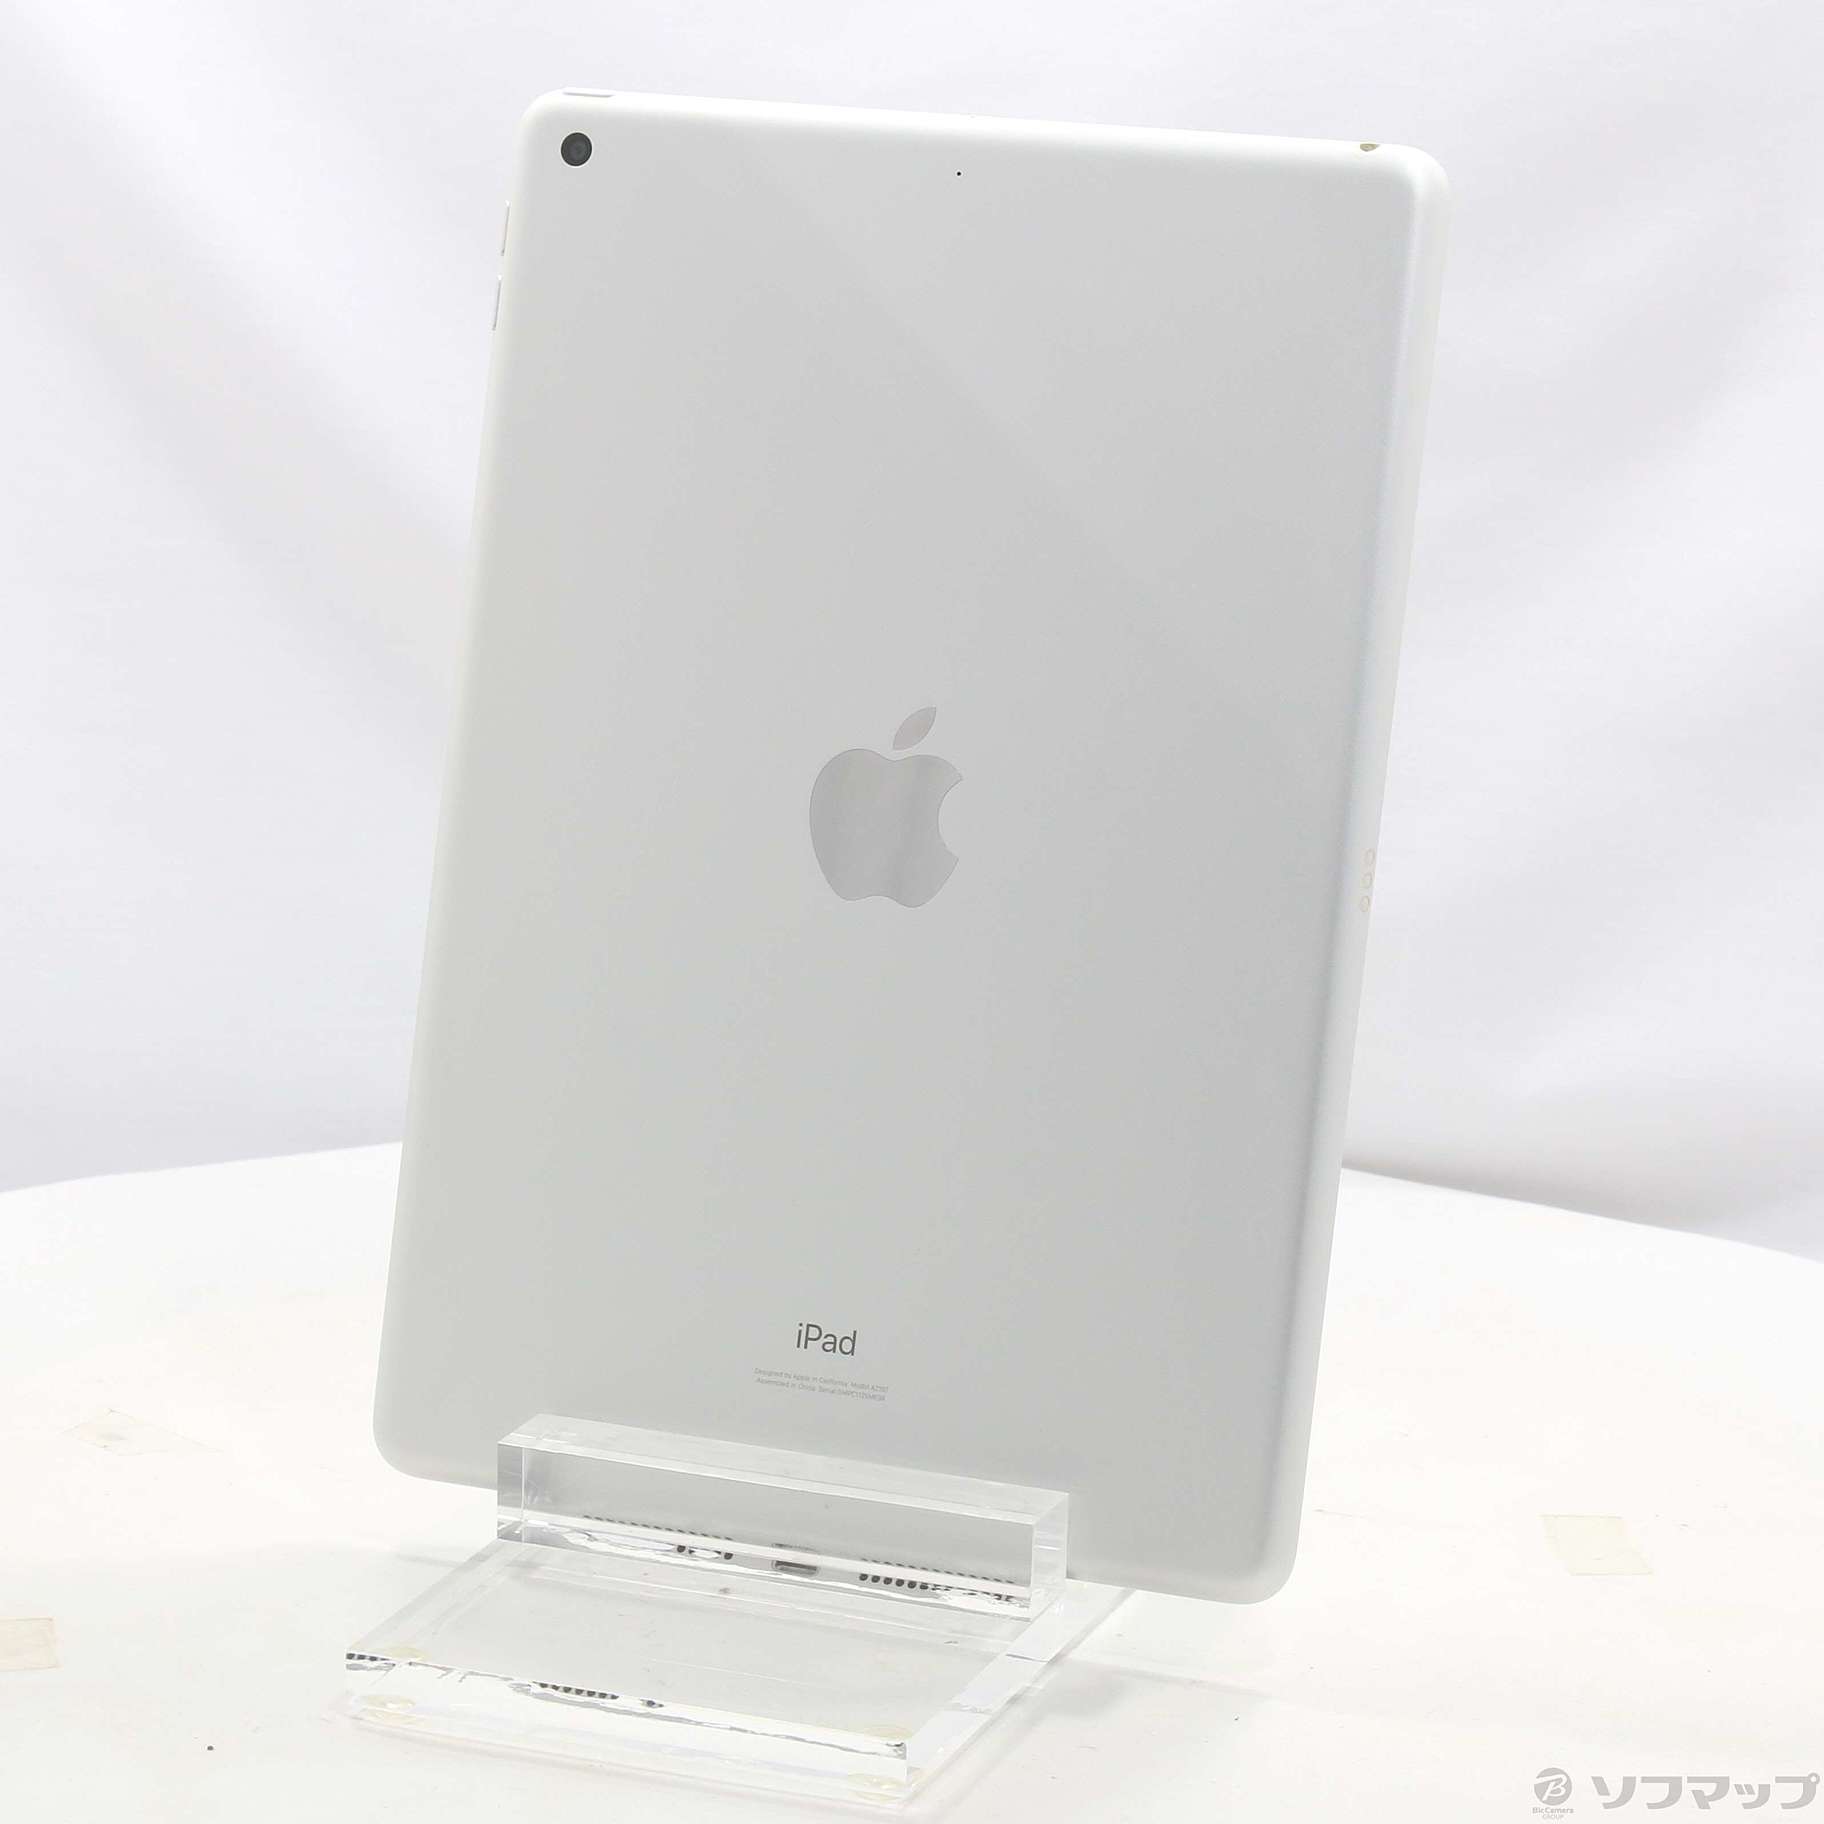 iPad 第7世代 128GB シルバー